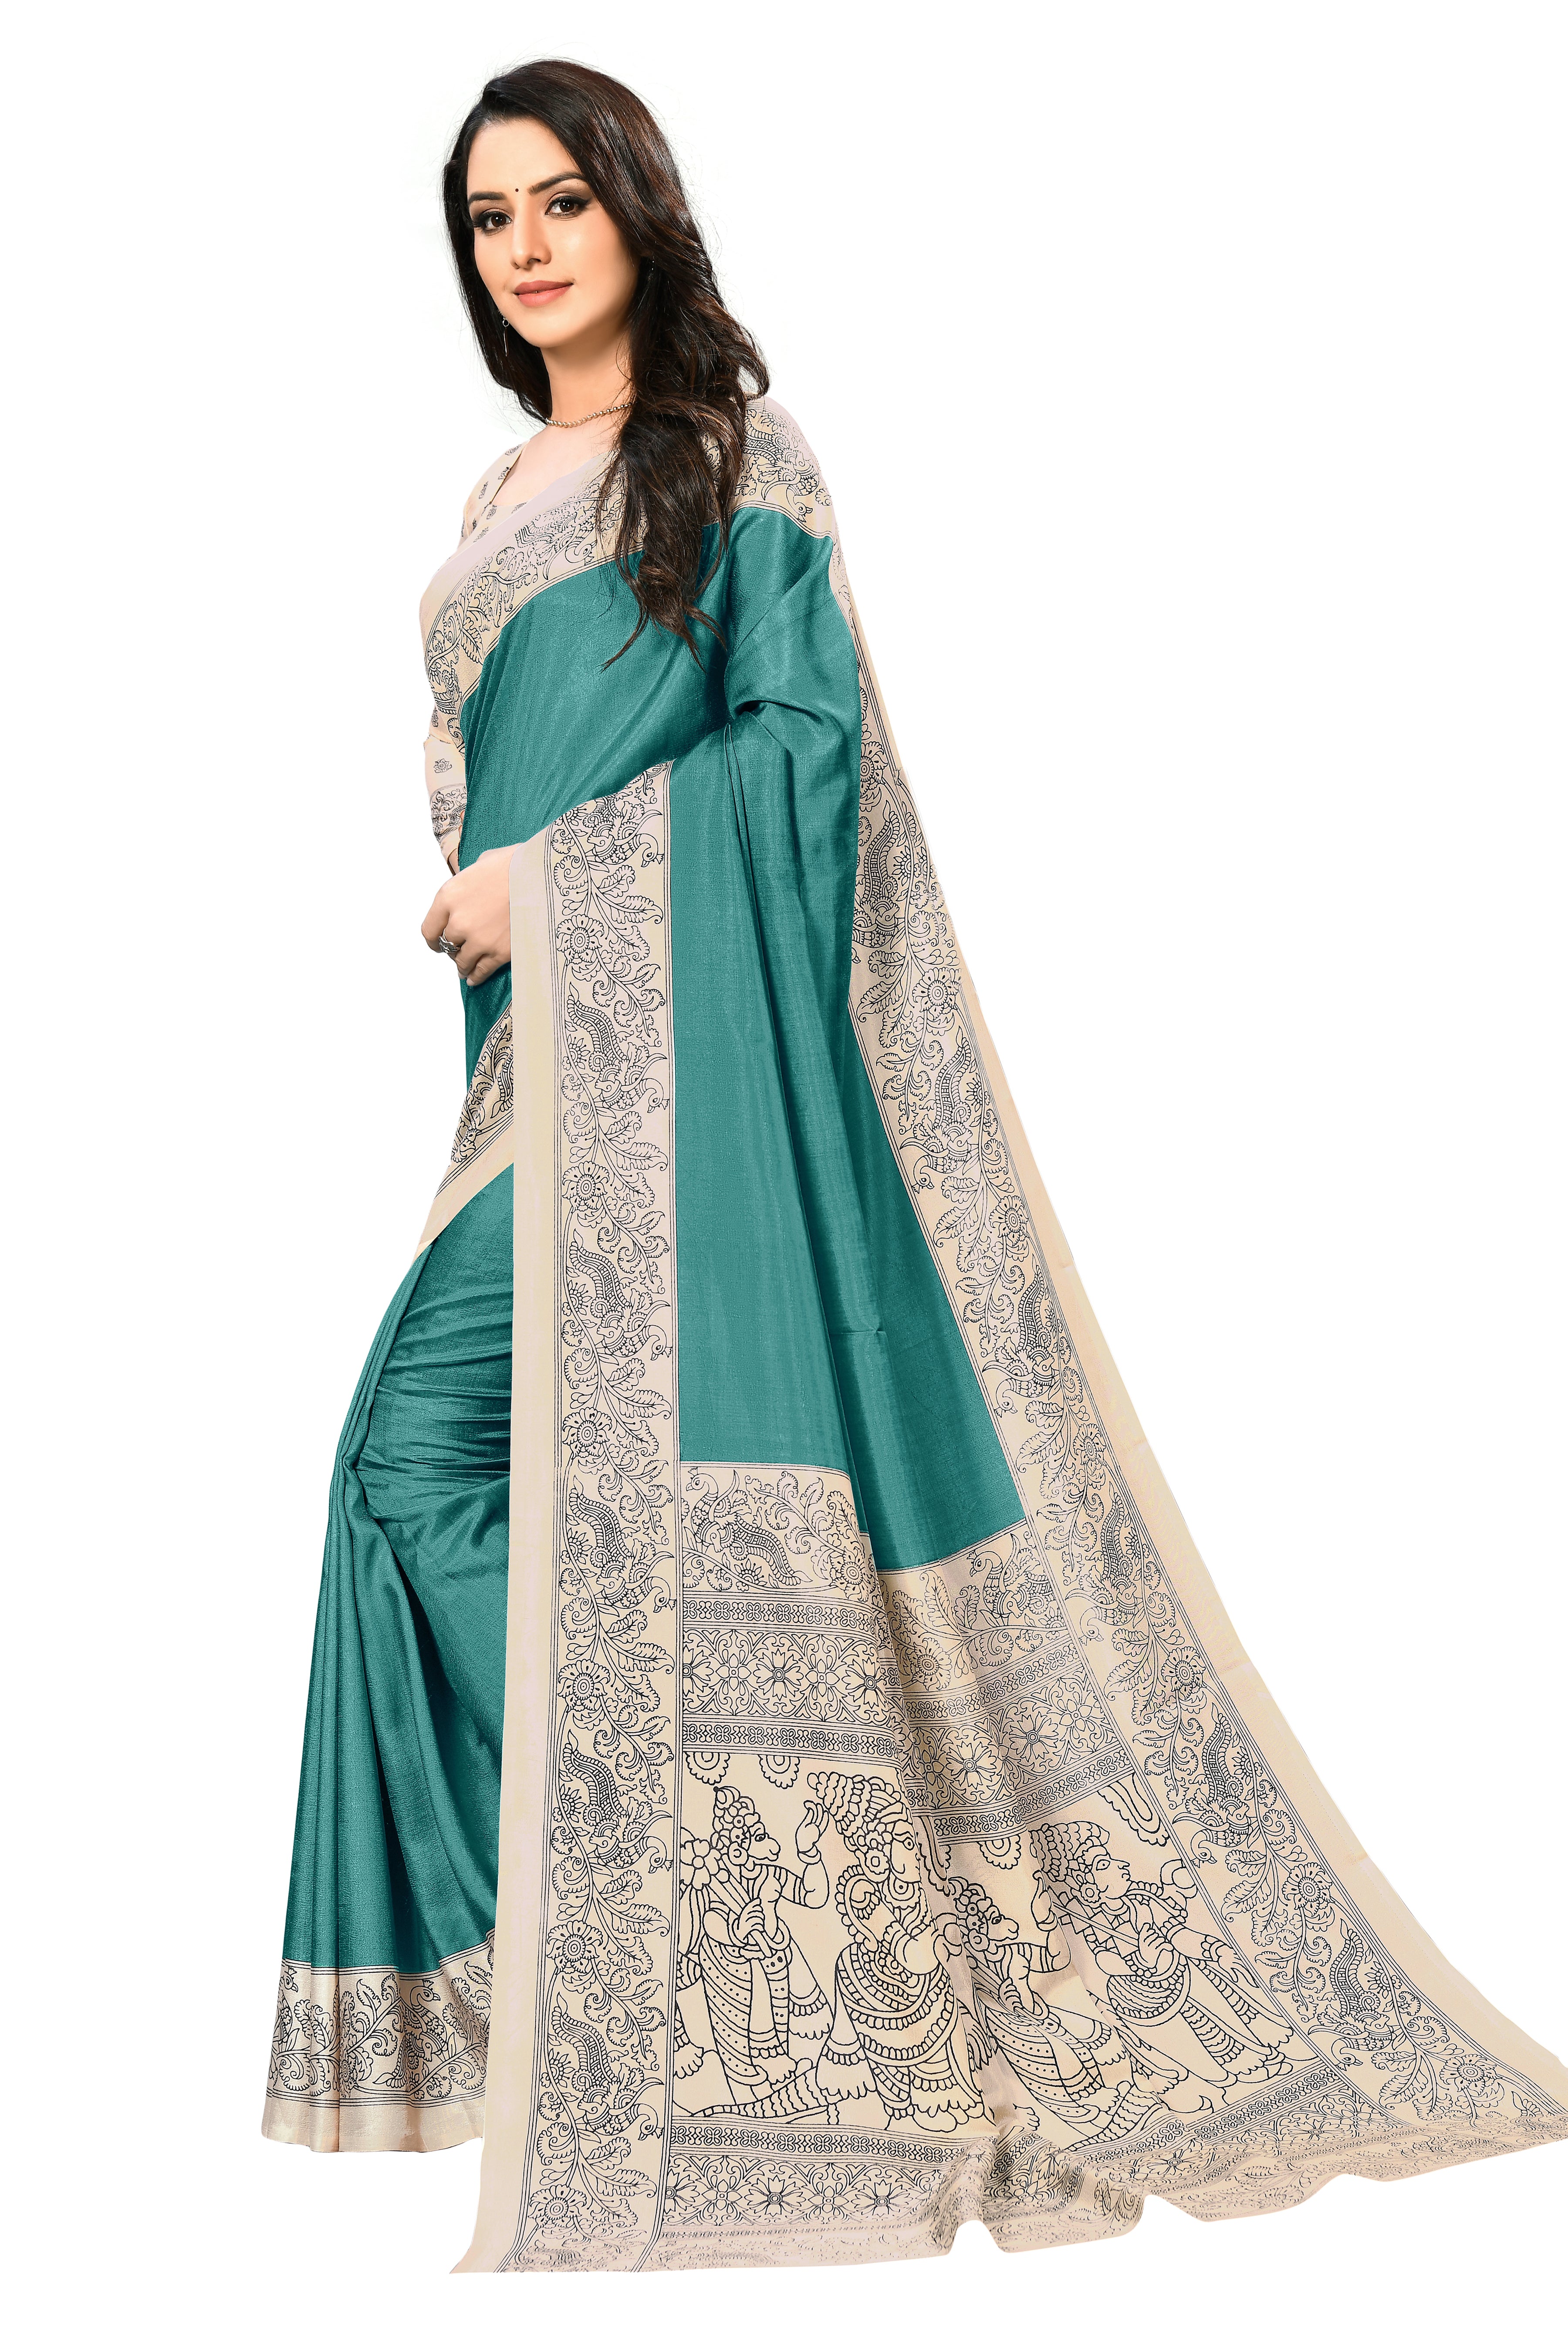 Vimla Women's Turquoise Malgudi Art Silk Uniform Saree with Blouse Piece (2213_Turquoise)